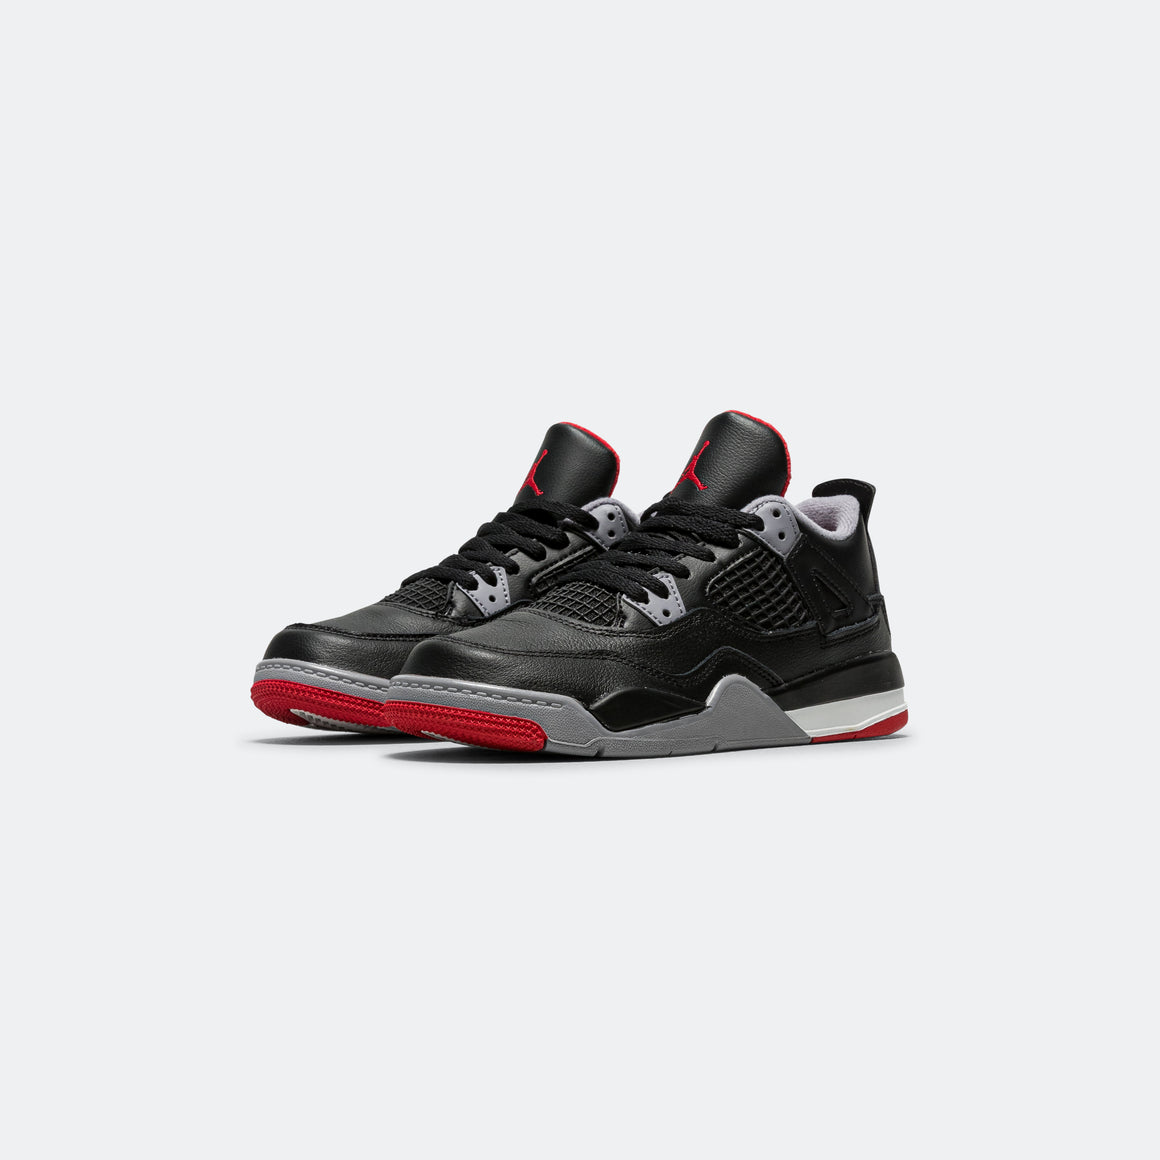 Air Jordan 4 Retro (PS) - Black/Fire-Red Cement Grey